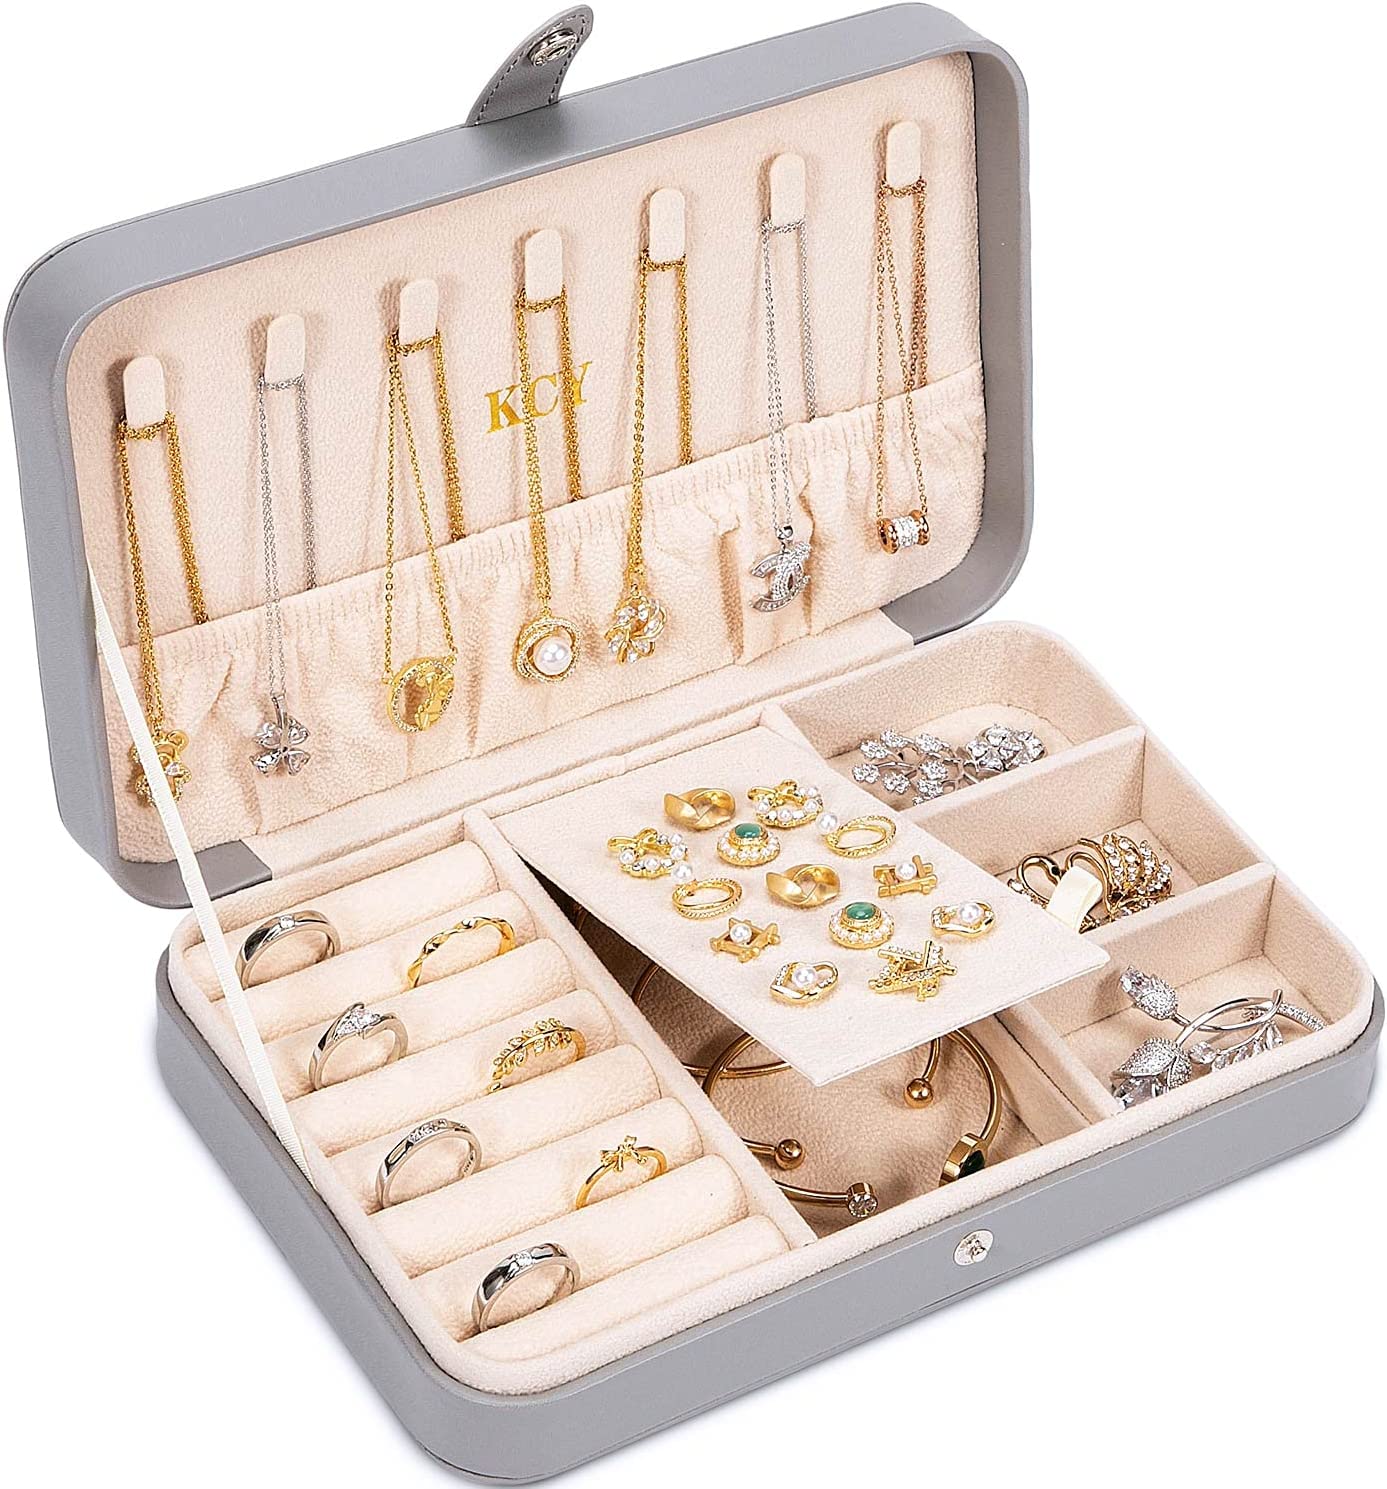 jewelry box plans